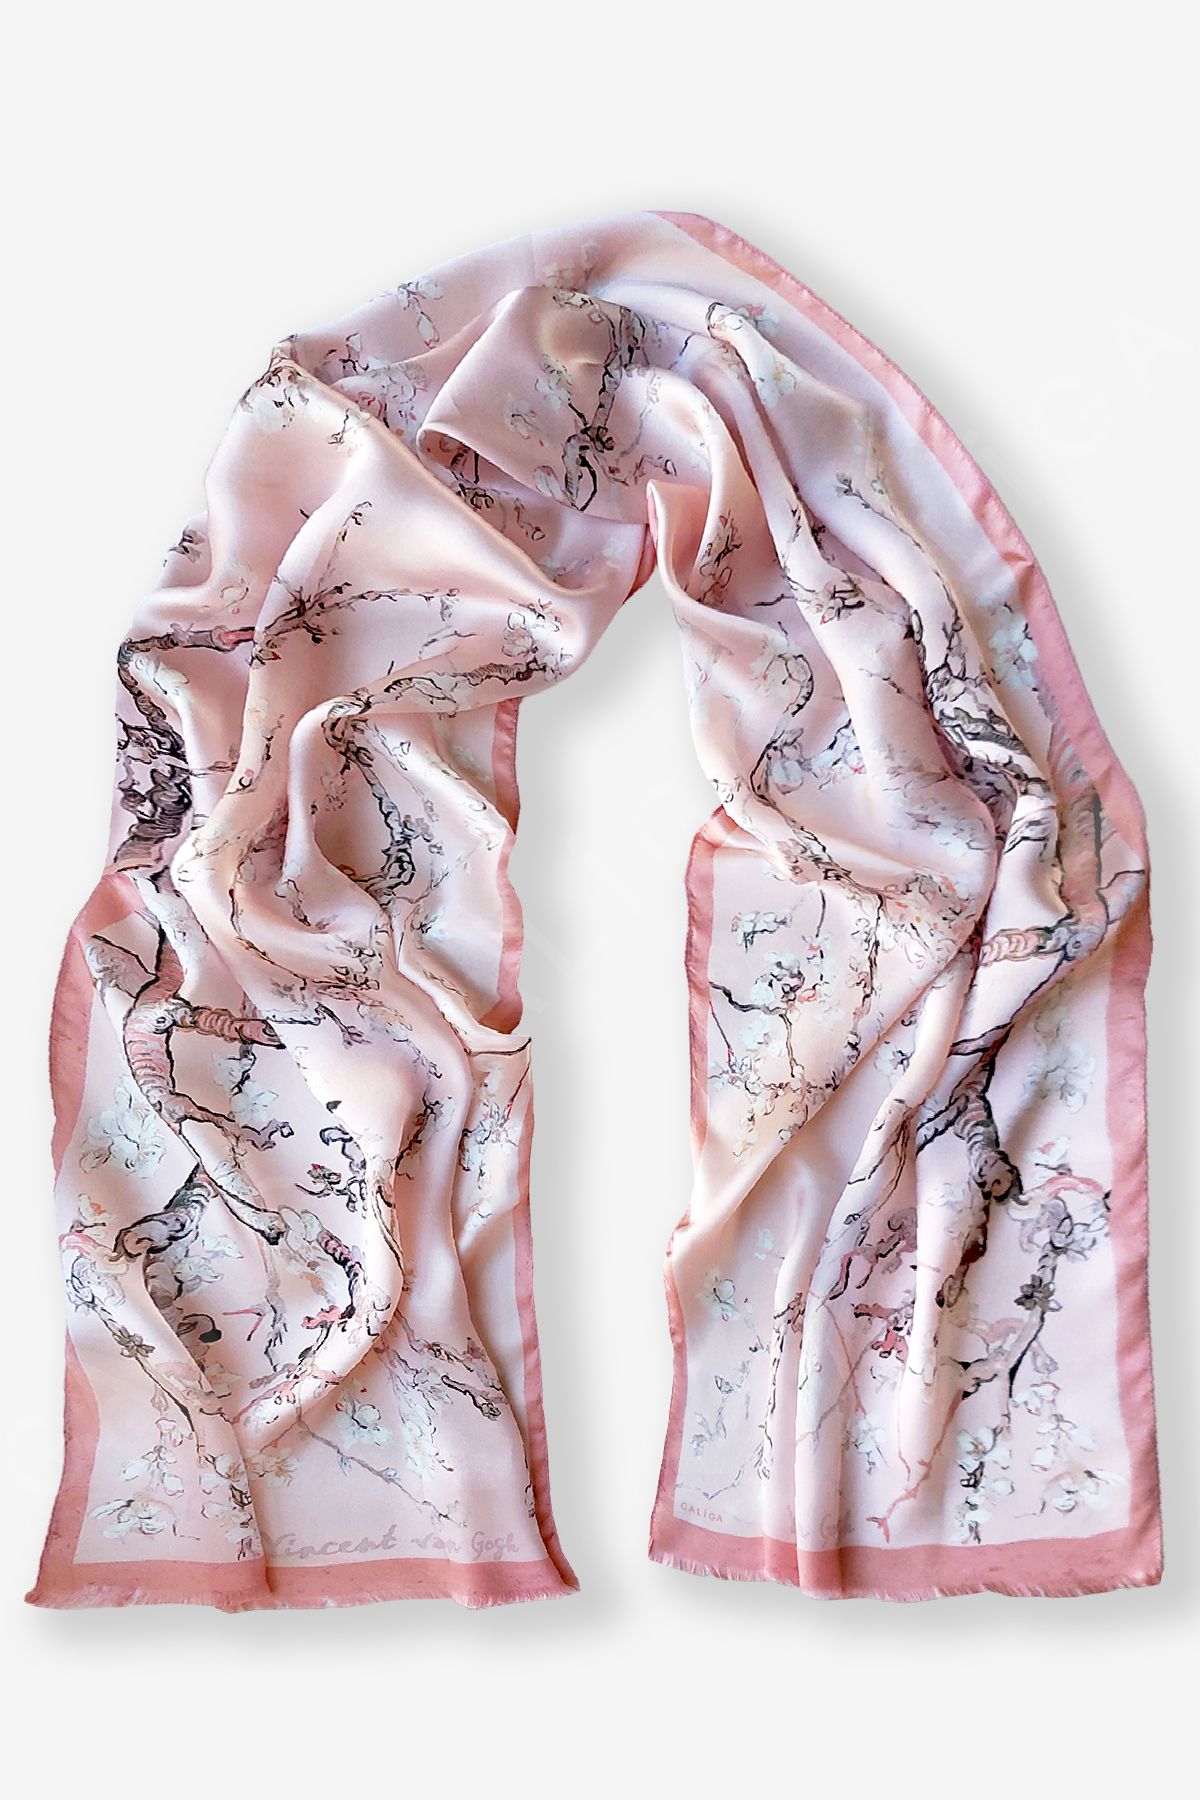 Galiga Van Gogh - Almond Pudra %100 Ipek Fular 45*165cm 'art On Silk'